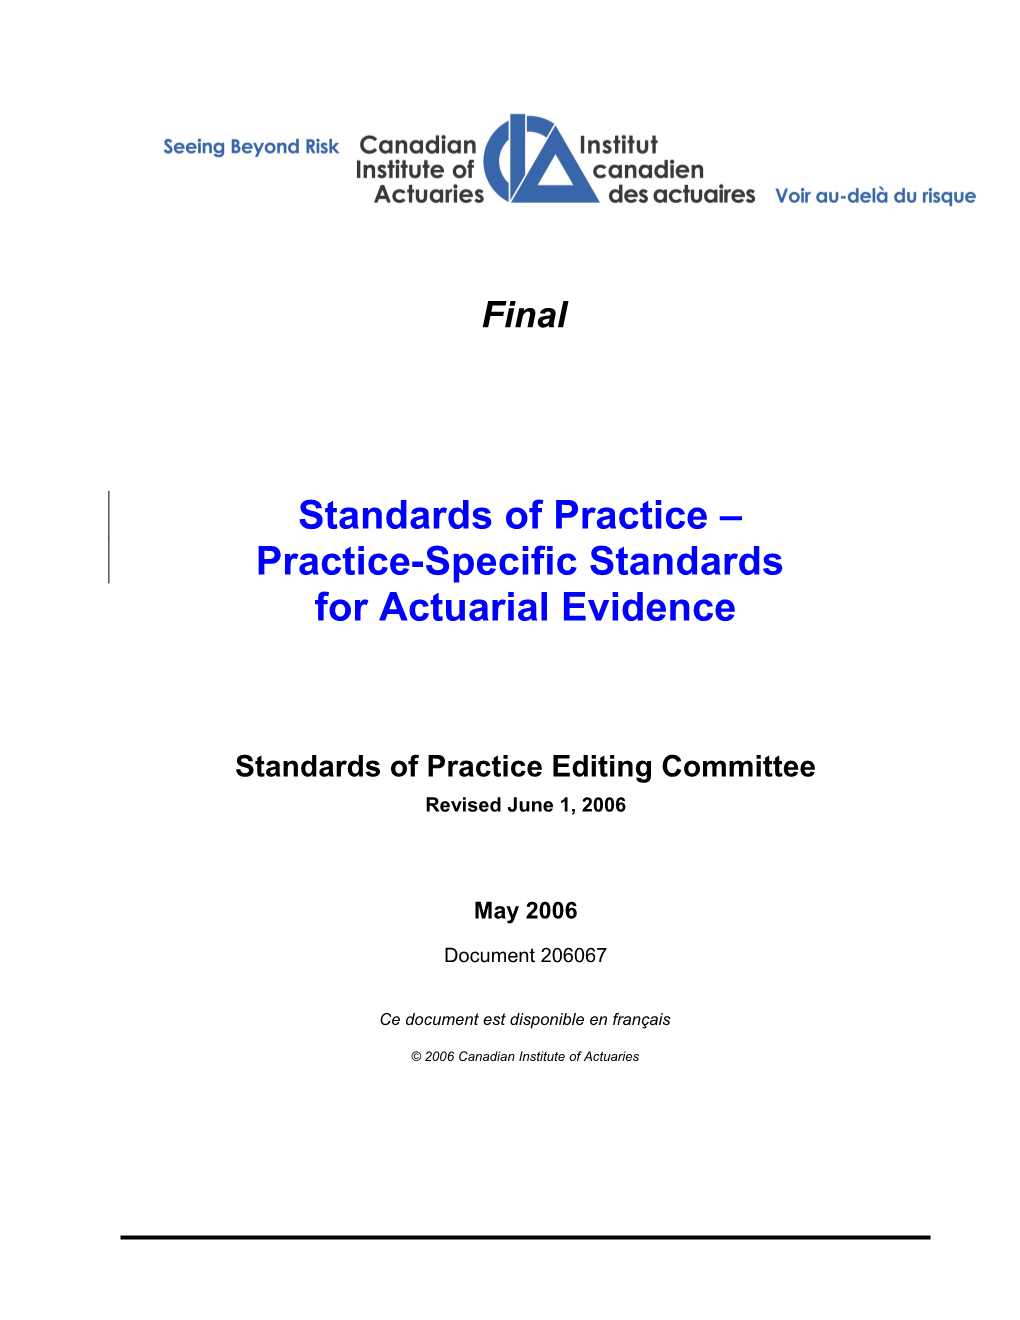 Standards of Practice Editing Committee